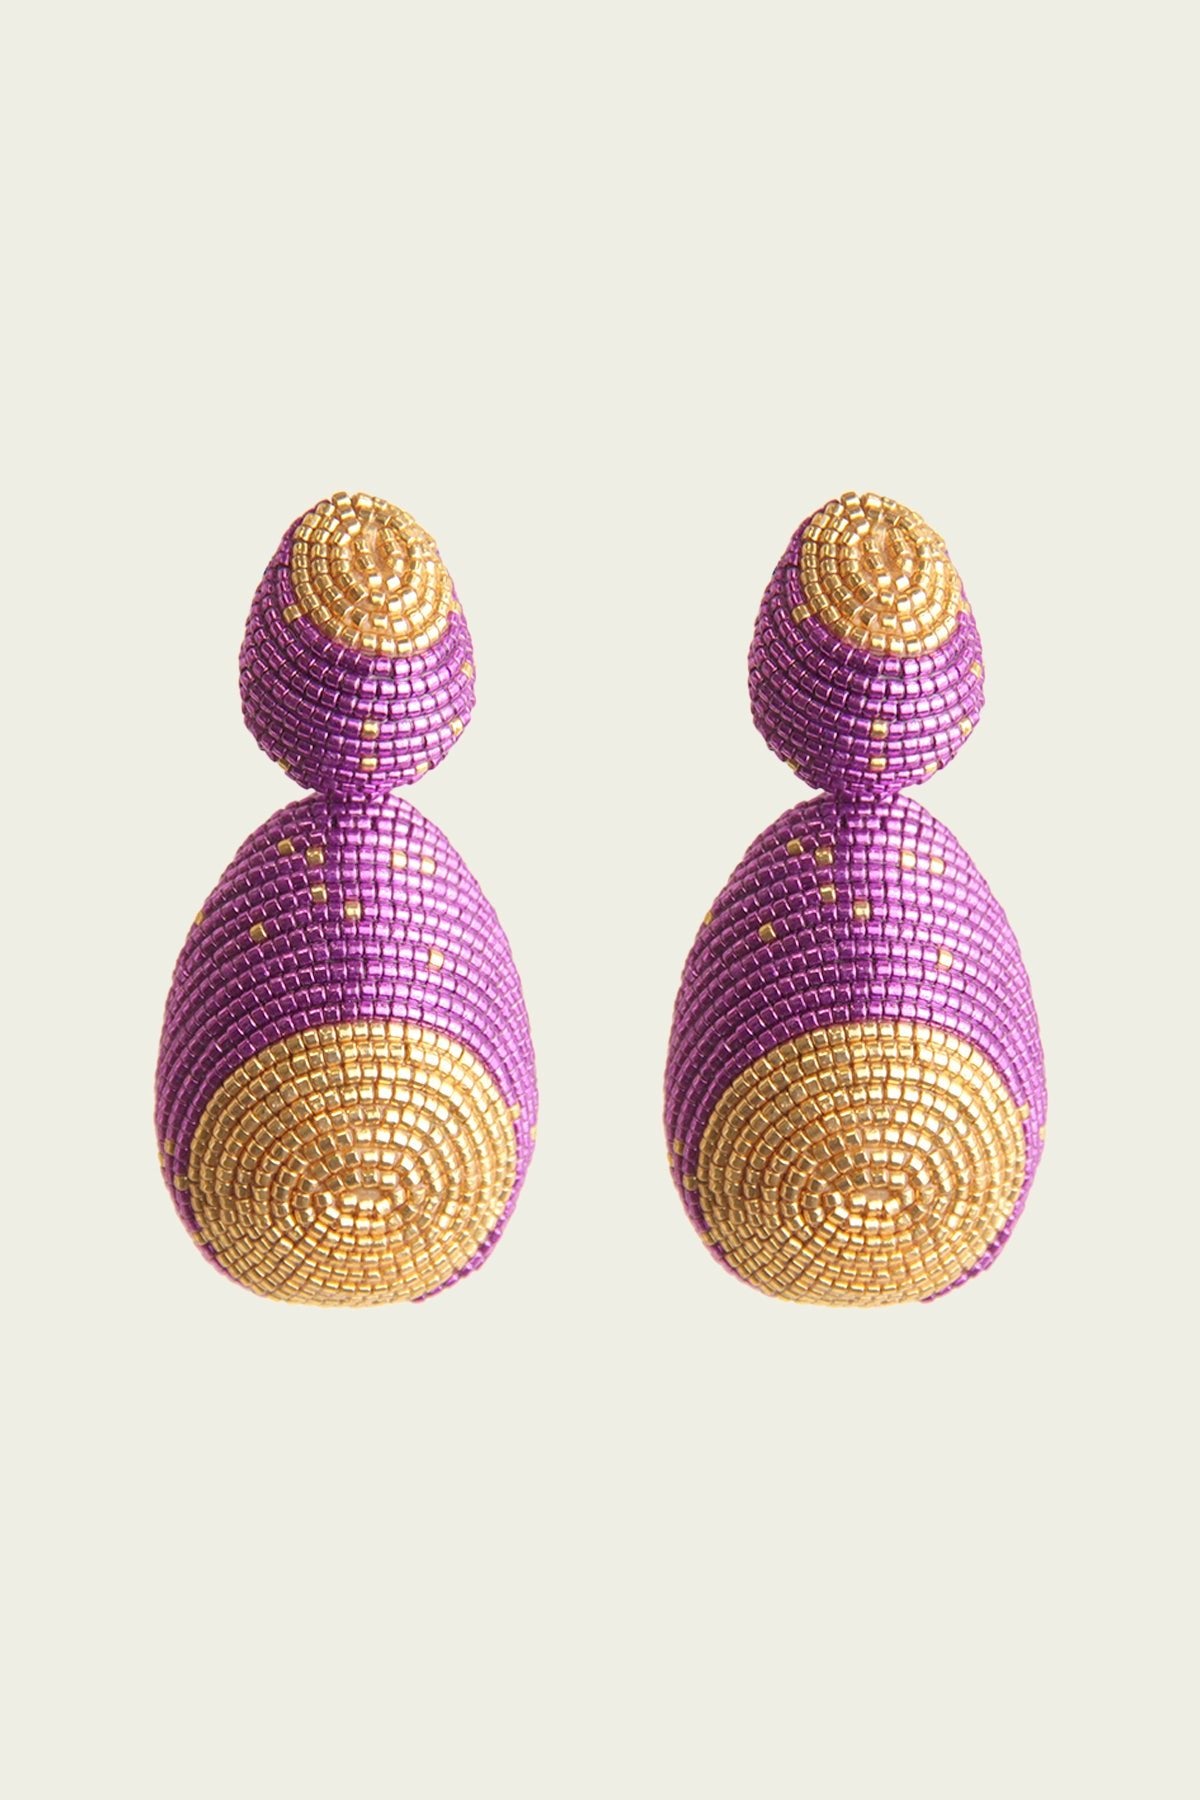 Che Che Detachable Earrings in Violet - shop-olivia.com